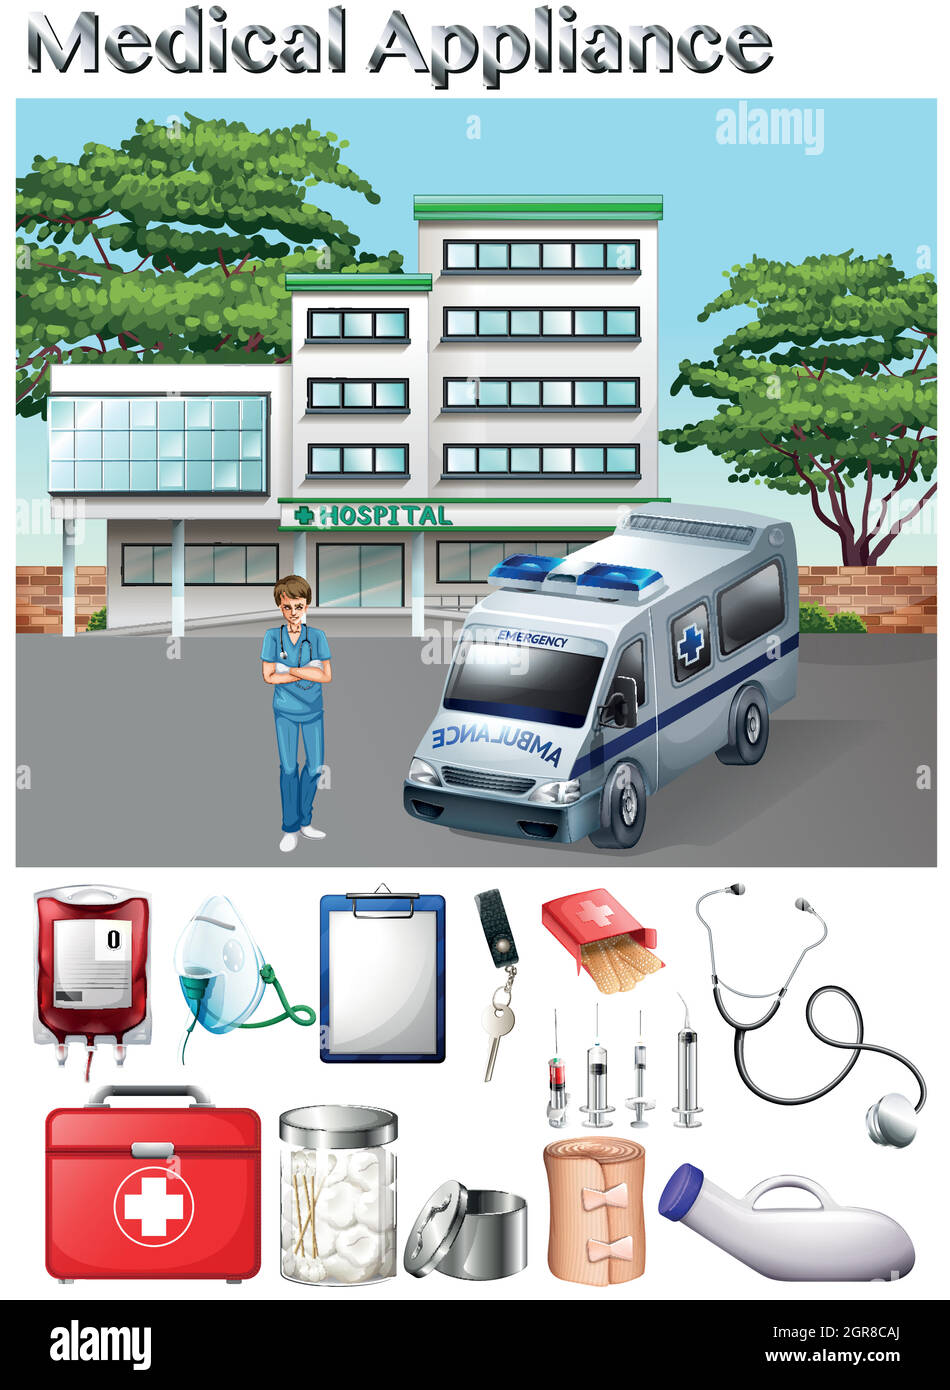 Medical appliance and hospital scene Stock Vector